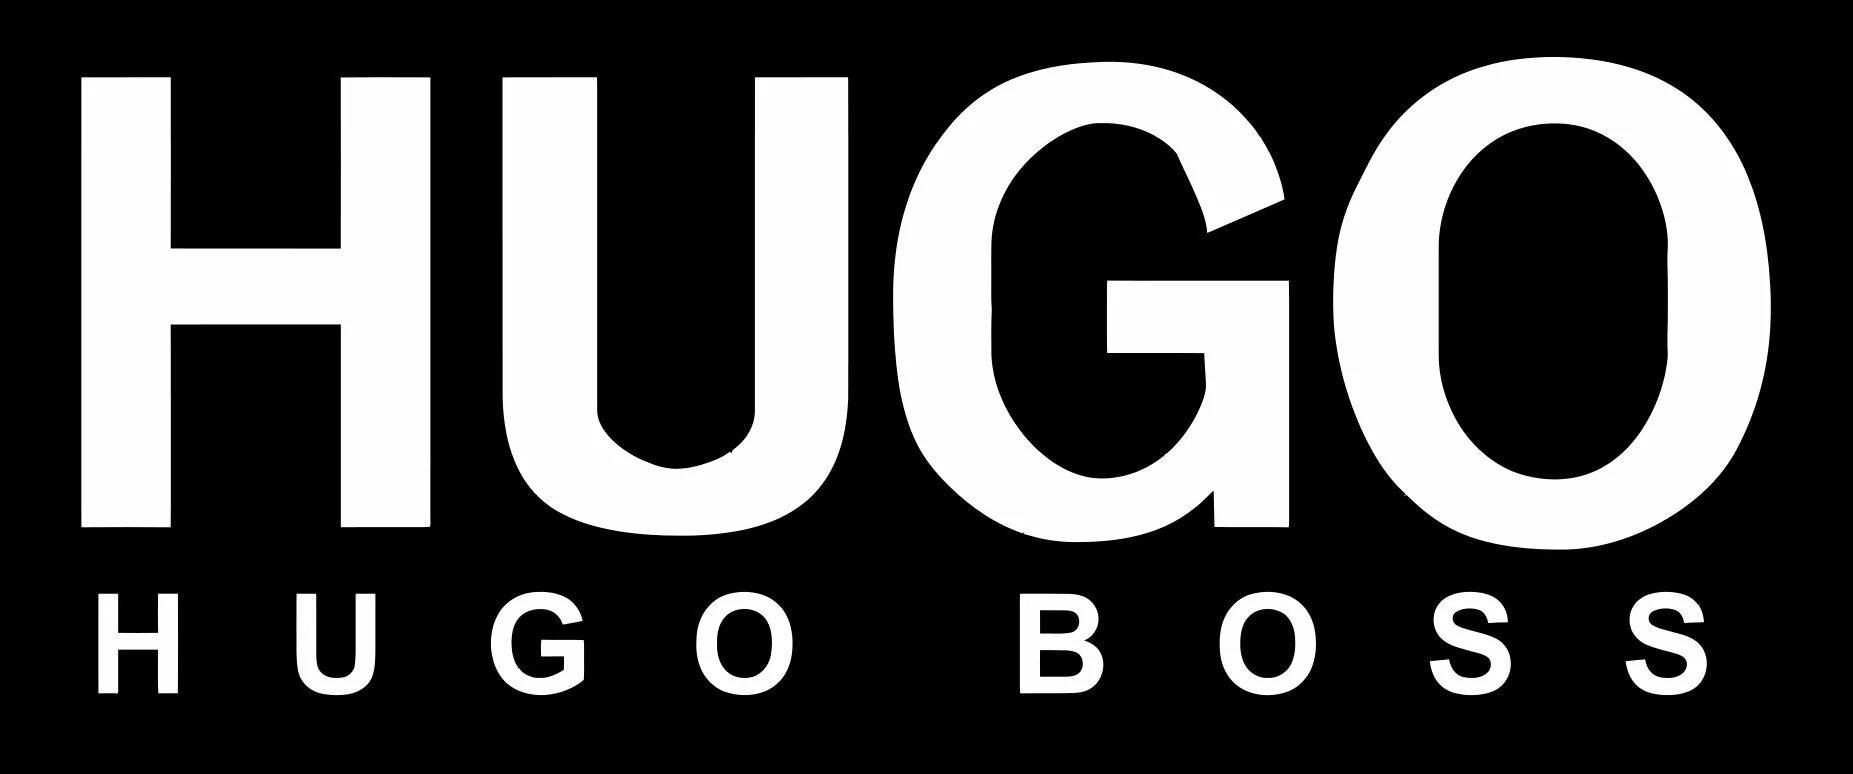 Hugo com. Hugo Boss logo. Hugo Boss логотип бренда. Hugo Boss на одежде логотип. Hugo Boss духи лого.